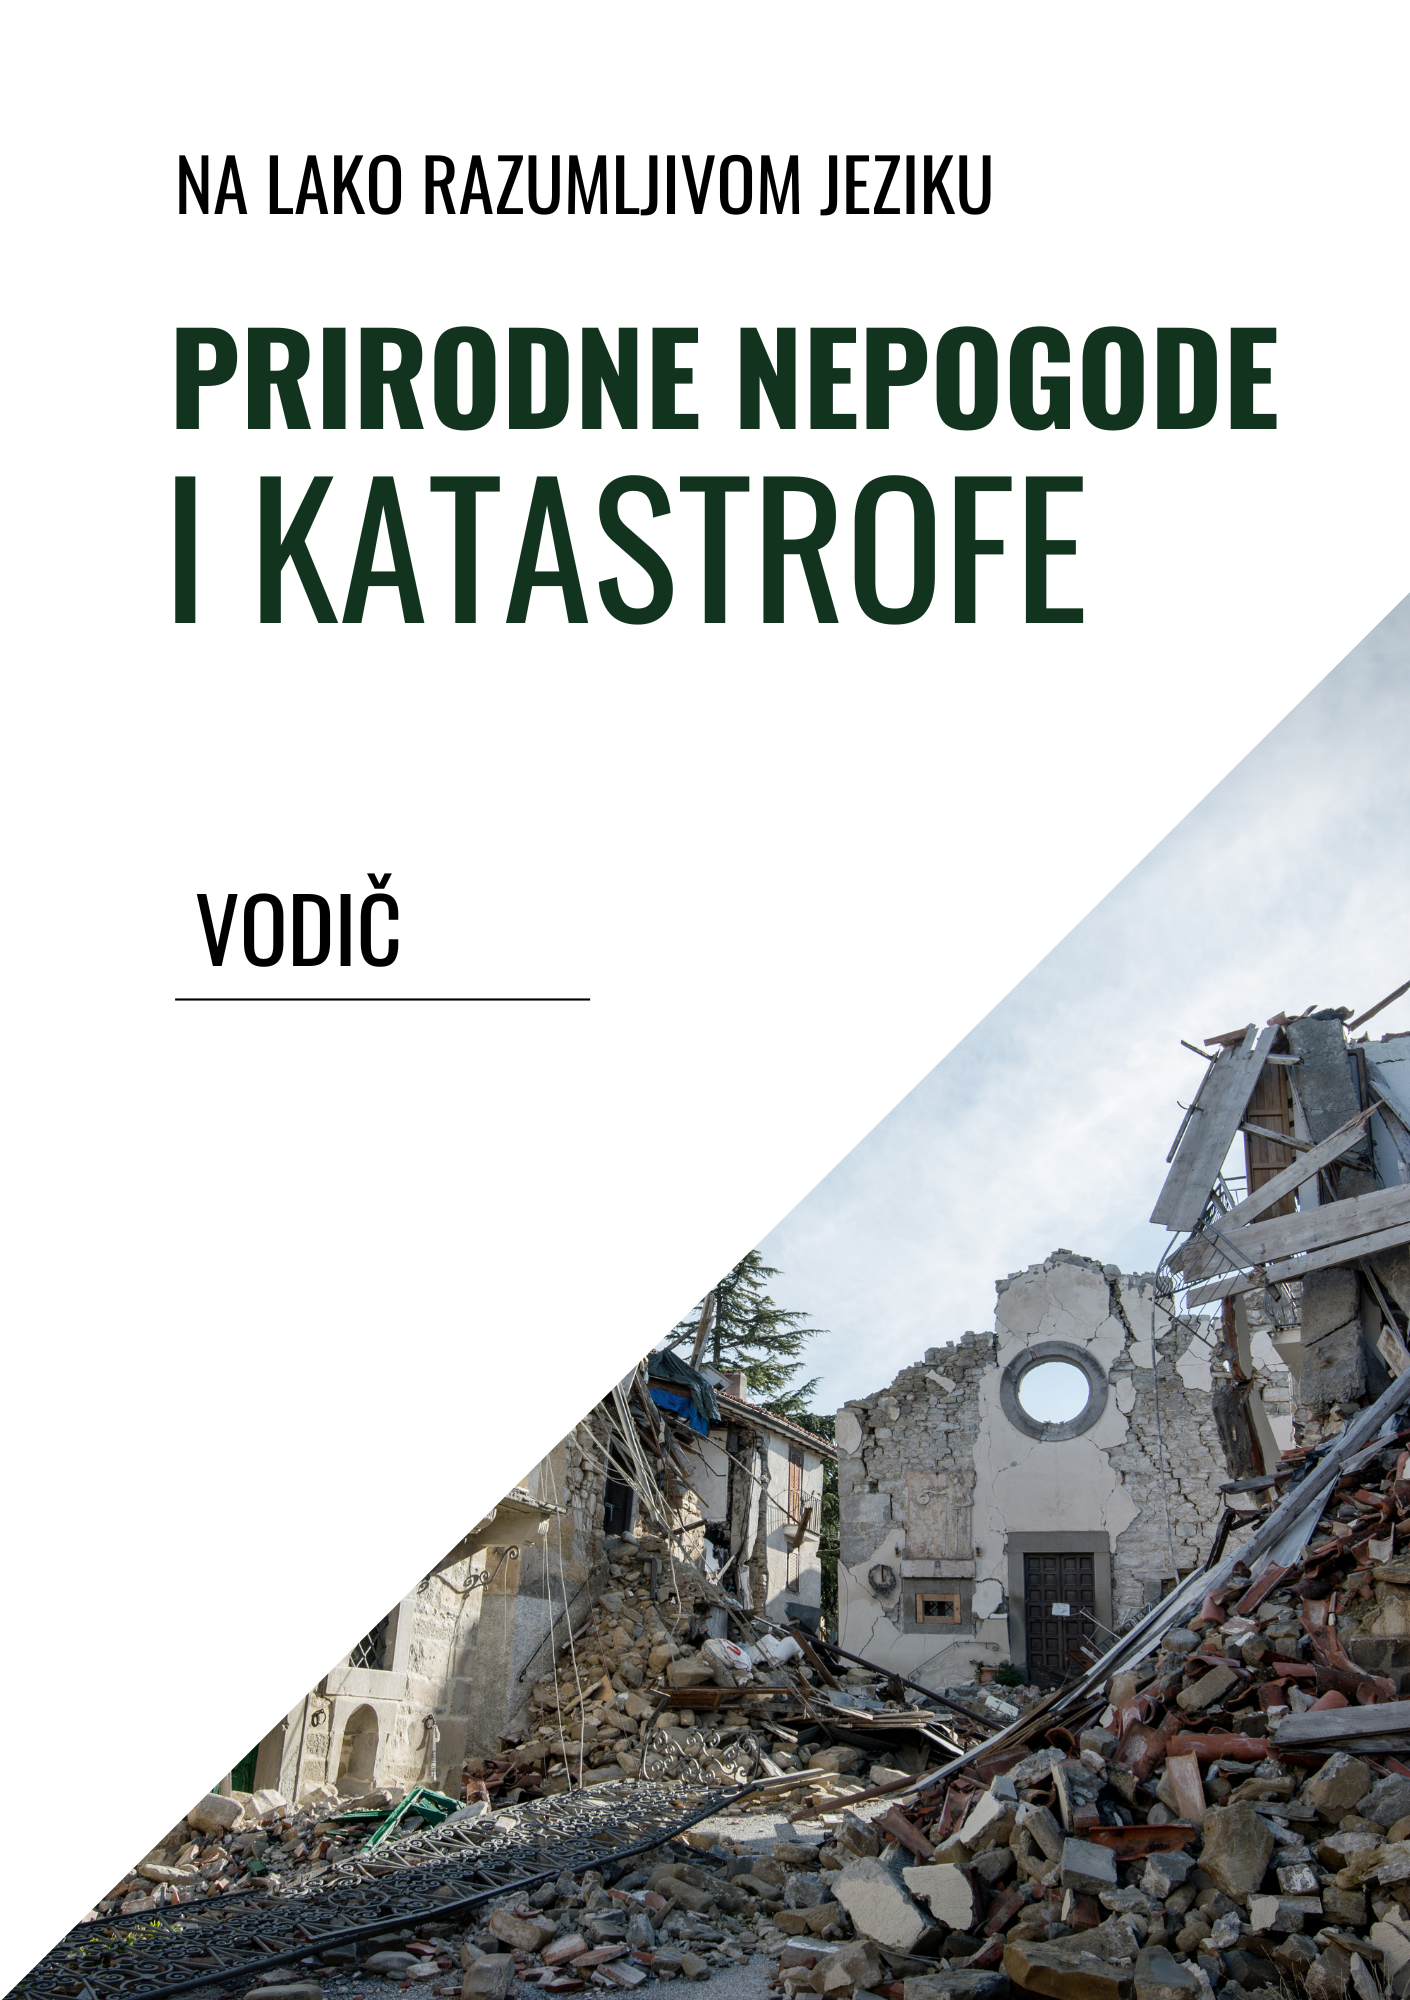 Naslovna stranica vodiča, slika zemljotresa i tekst Prirodne nepogode i katastrofe na lako razumljivom jeziku